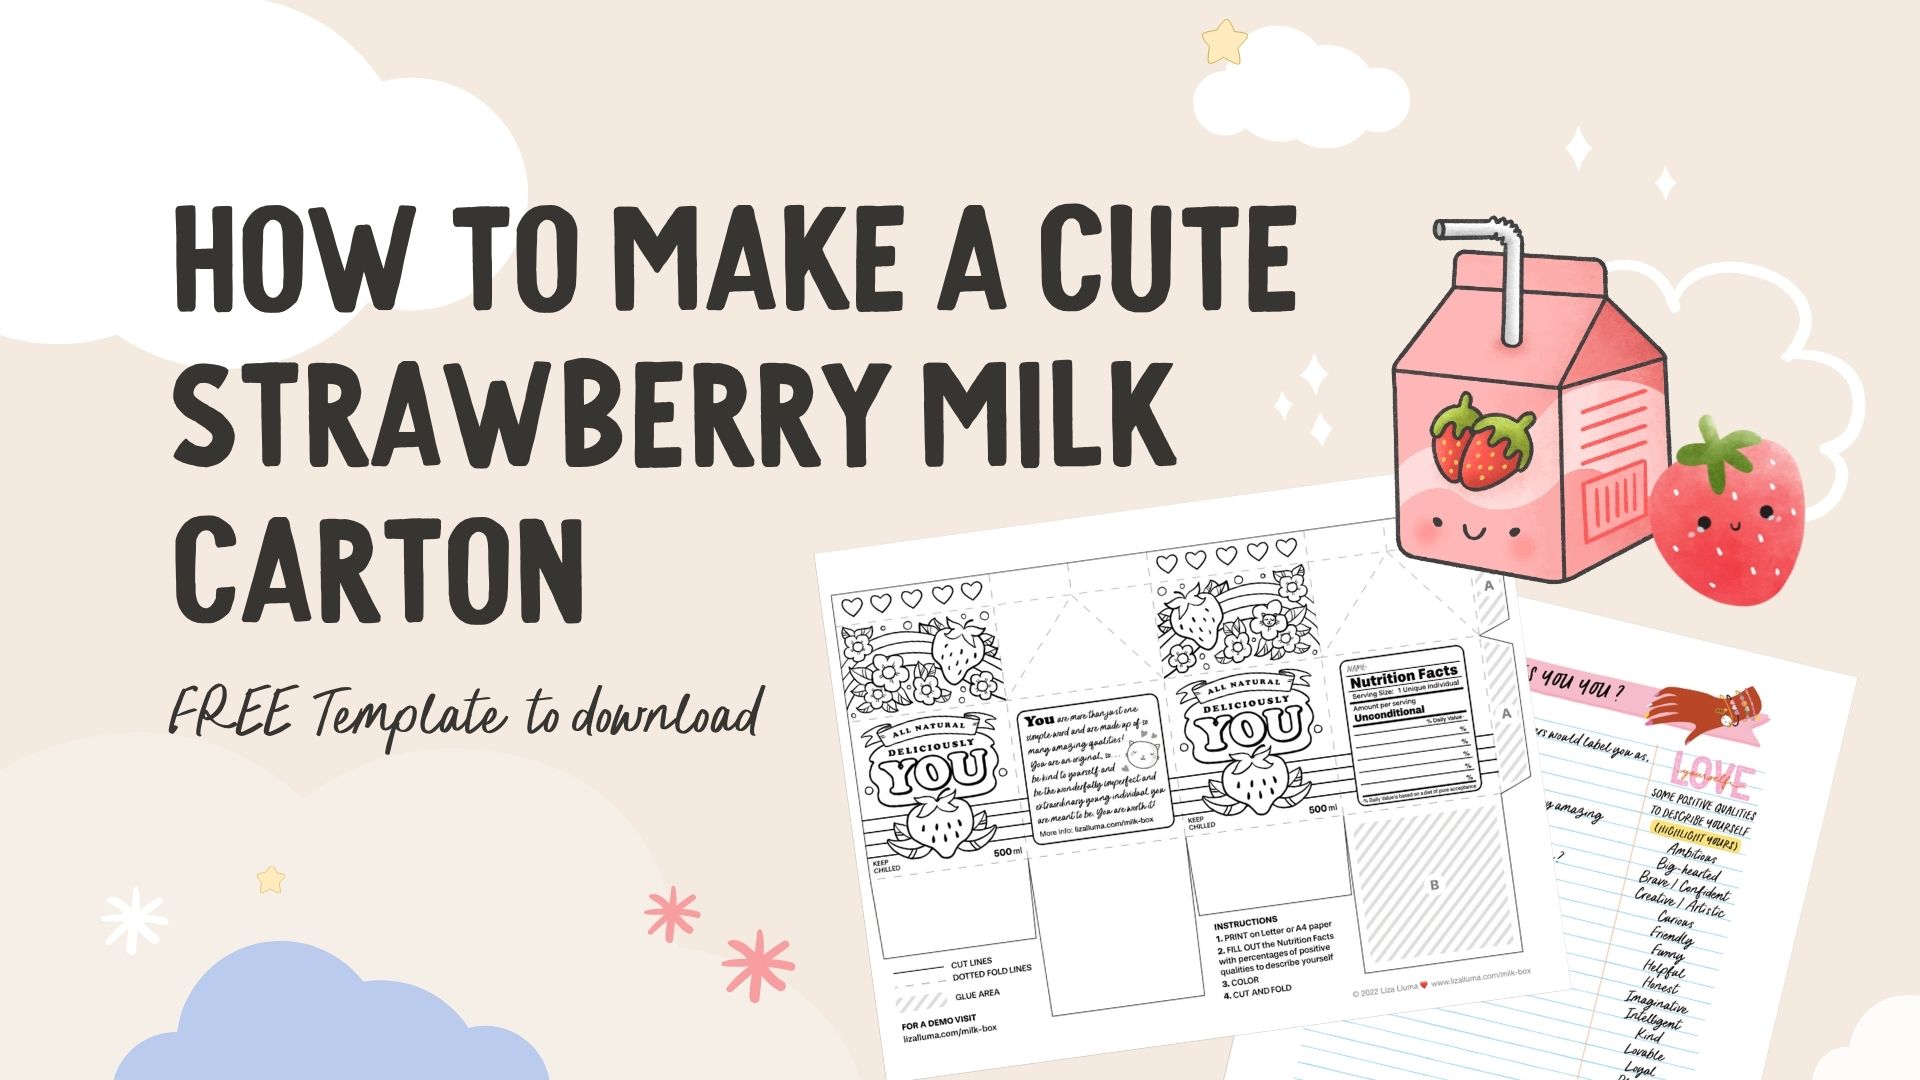 Strawberry Milk Carton template